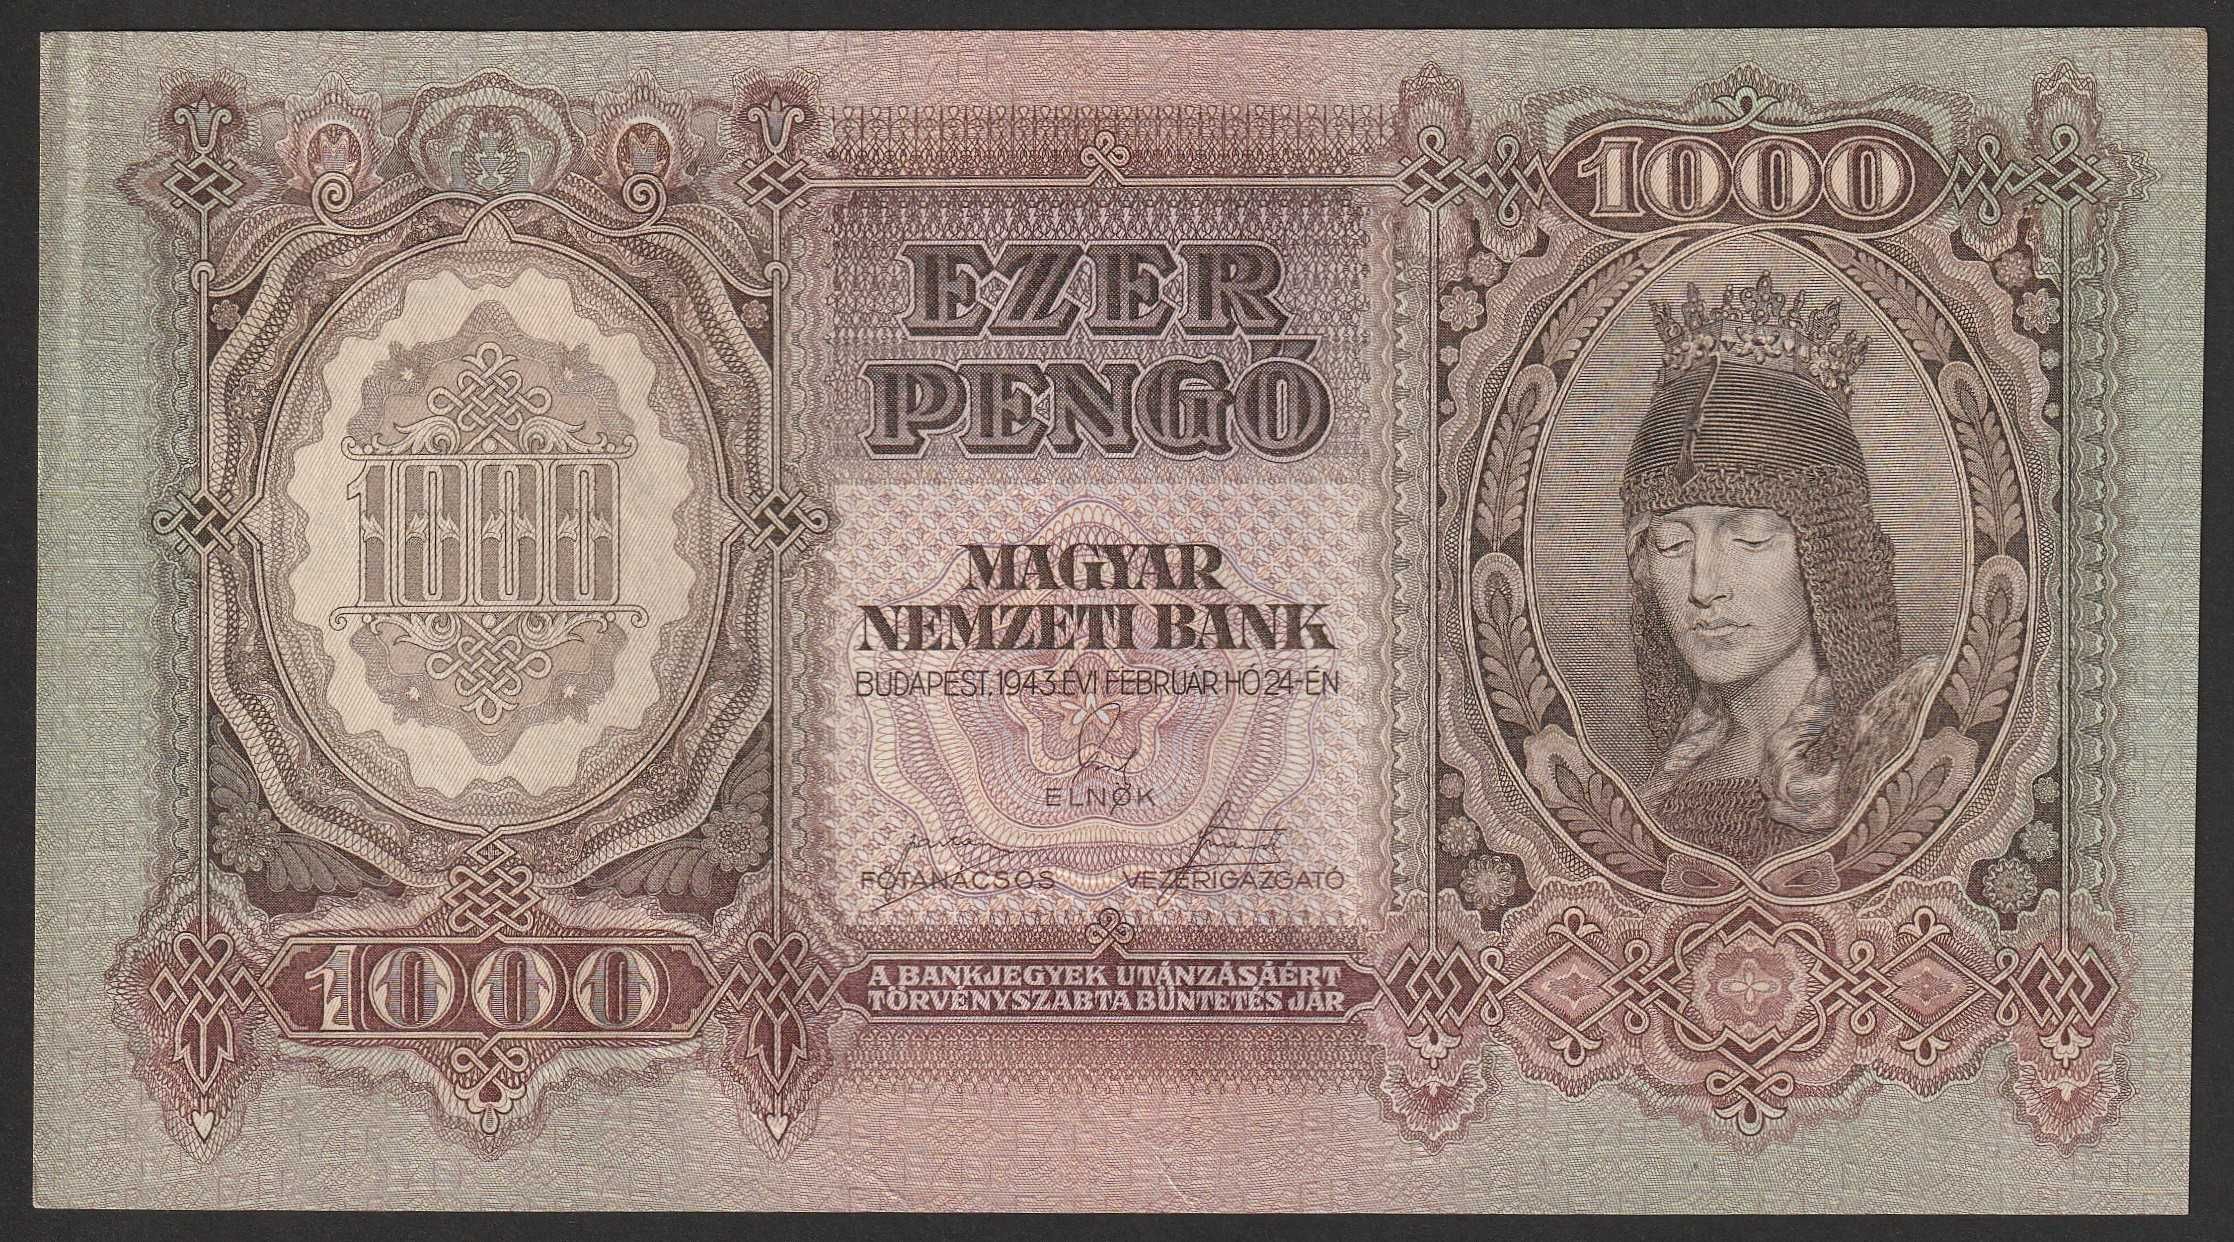 Węgry 1000 pengo 1943 - F072 - stan 2/1